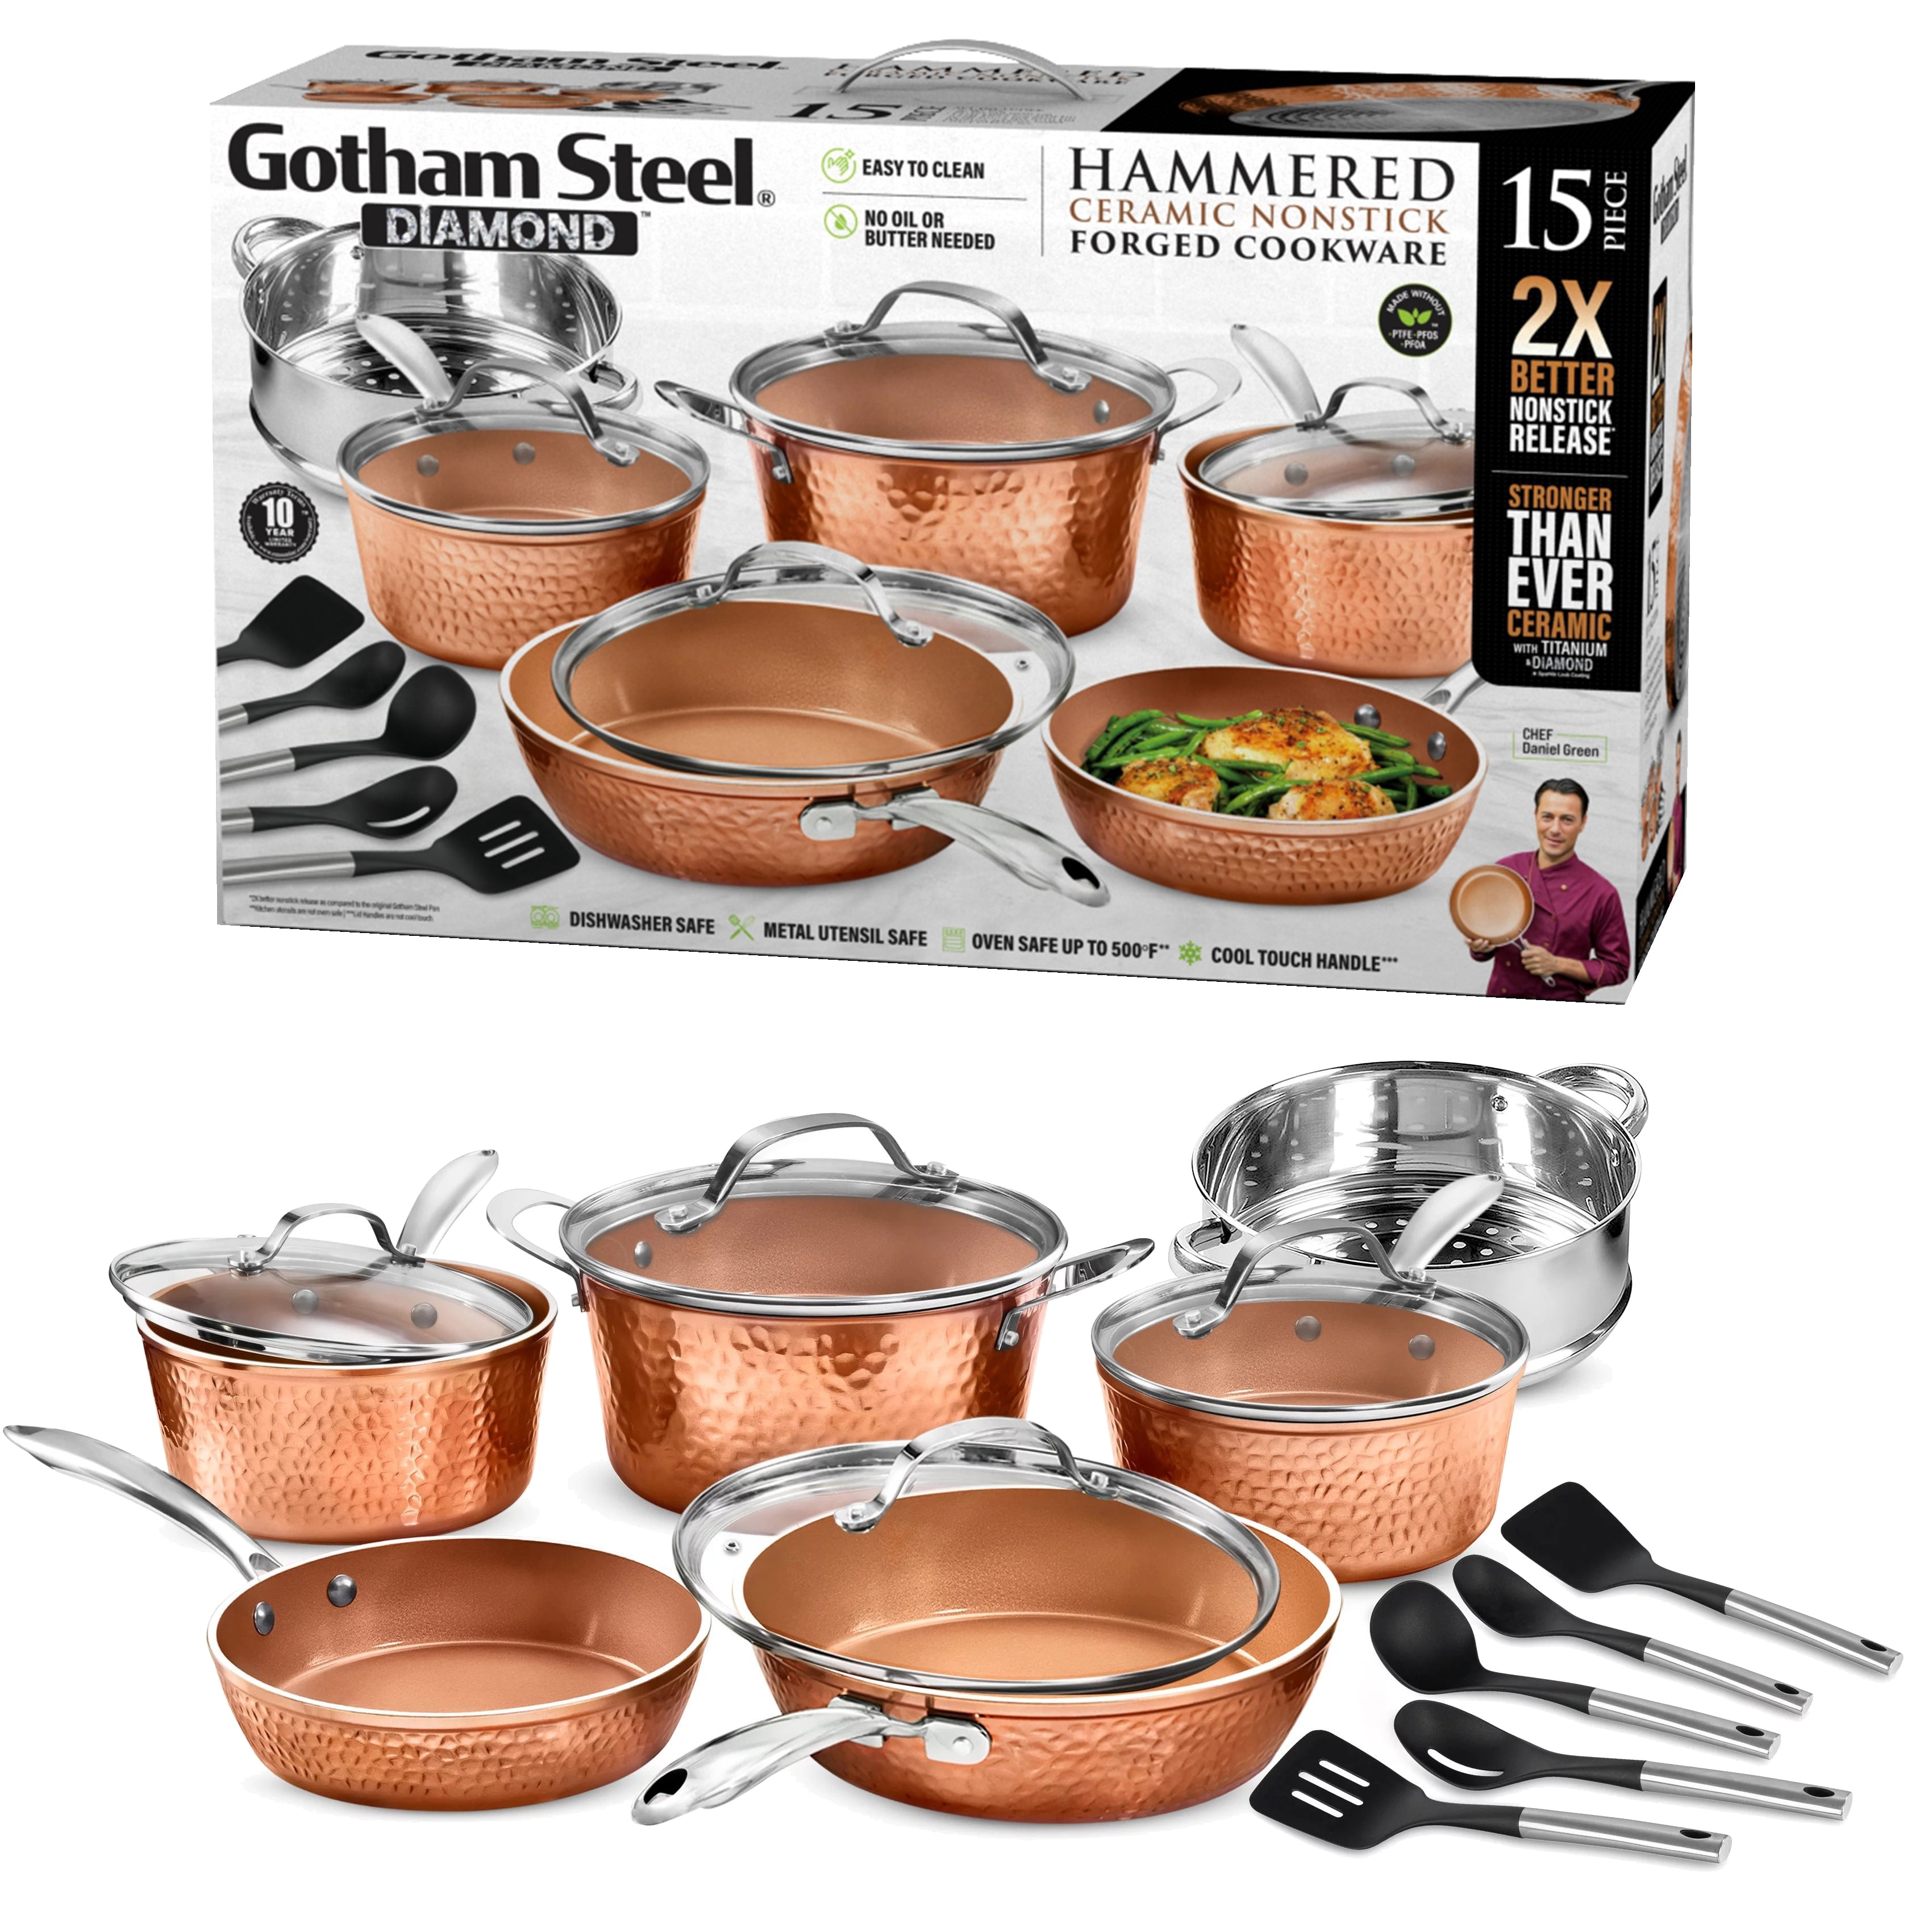 Gotham Steel Pro Ultra Ceramic 2x 11 Piece Nonstick Cookware Set - Black